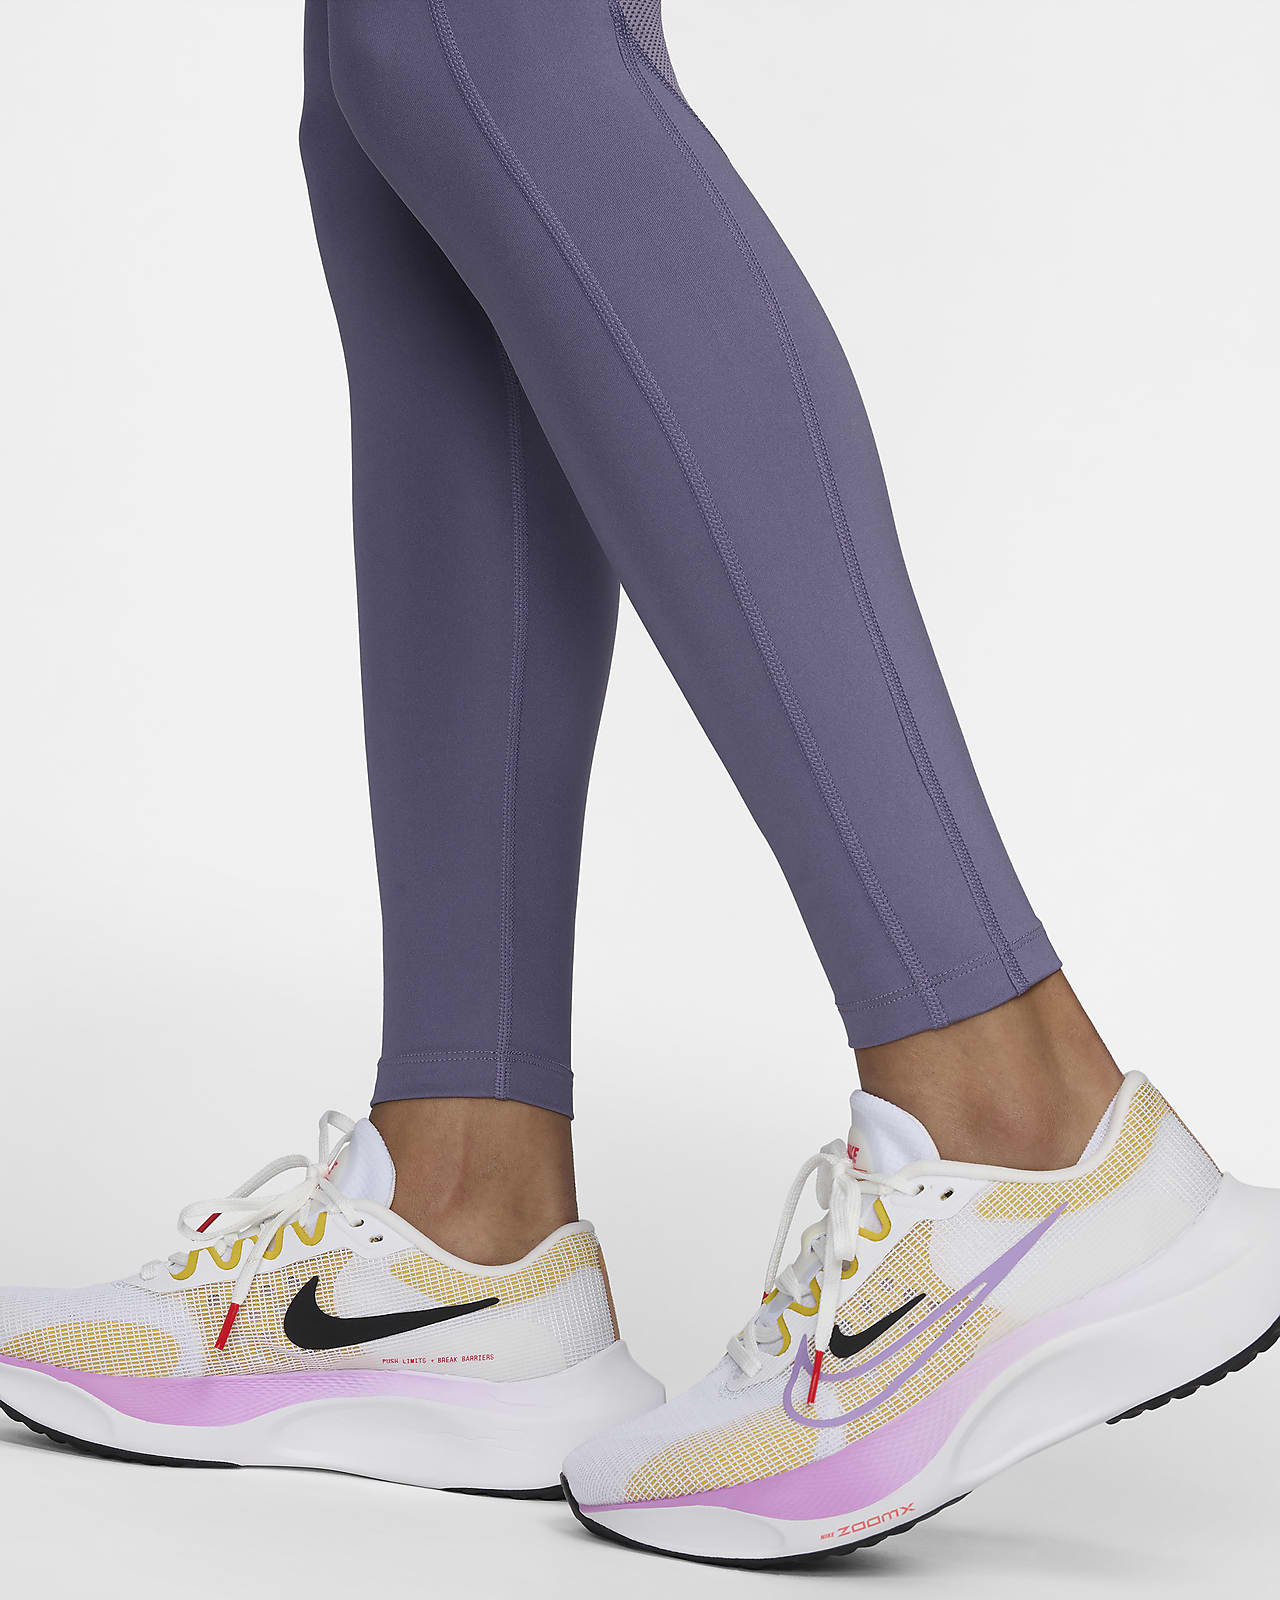 Nike Nike Air Running Leggings With Mesh Panels In Black